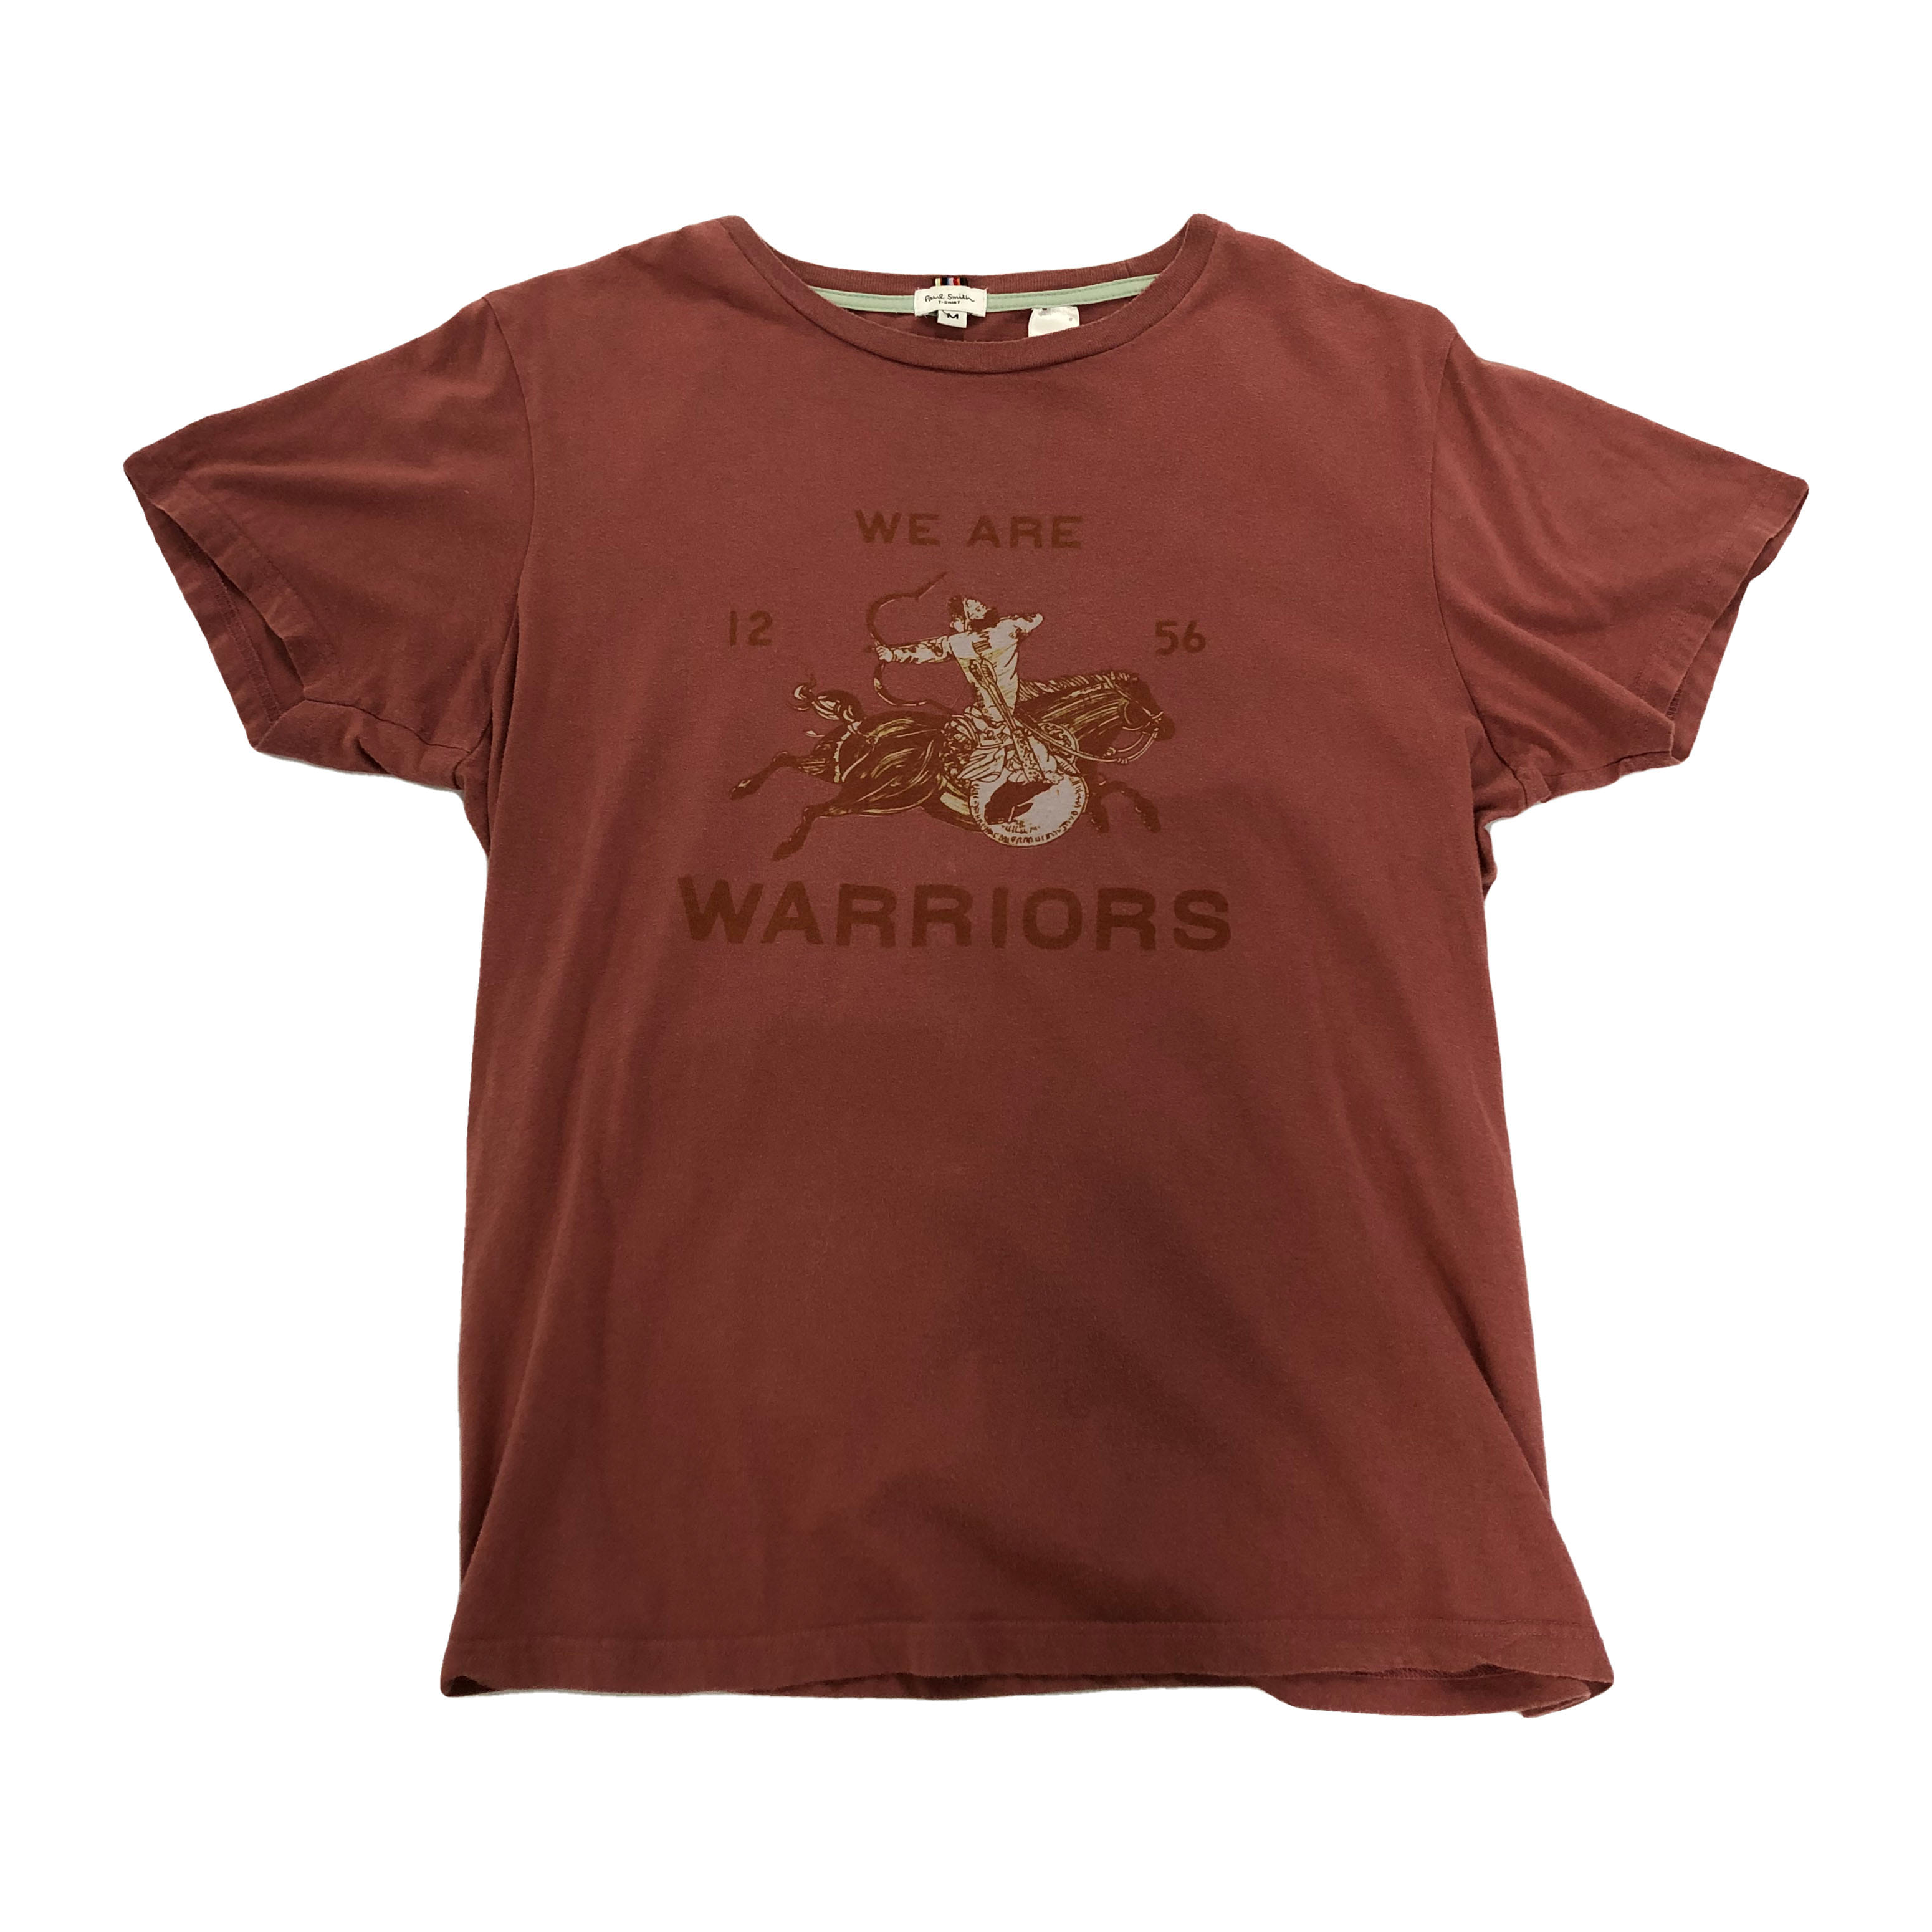 [Paul Smith] Warriors T-Shirt (Size M)